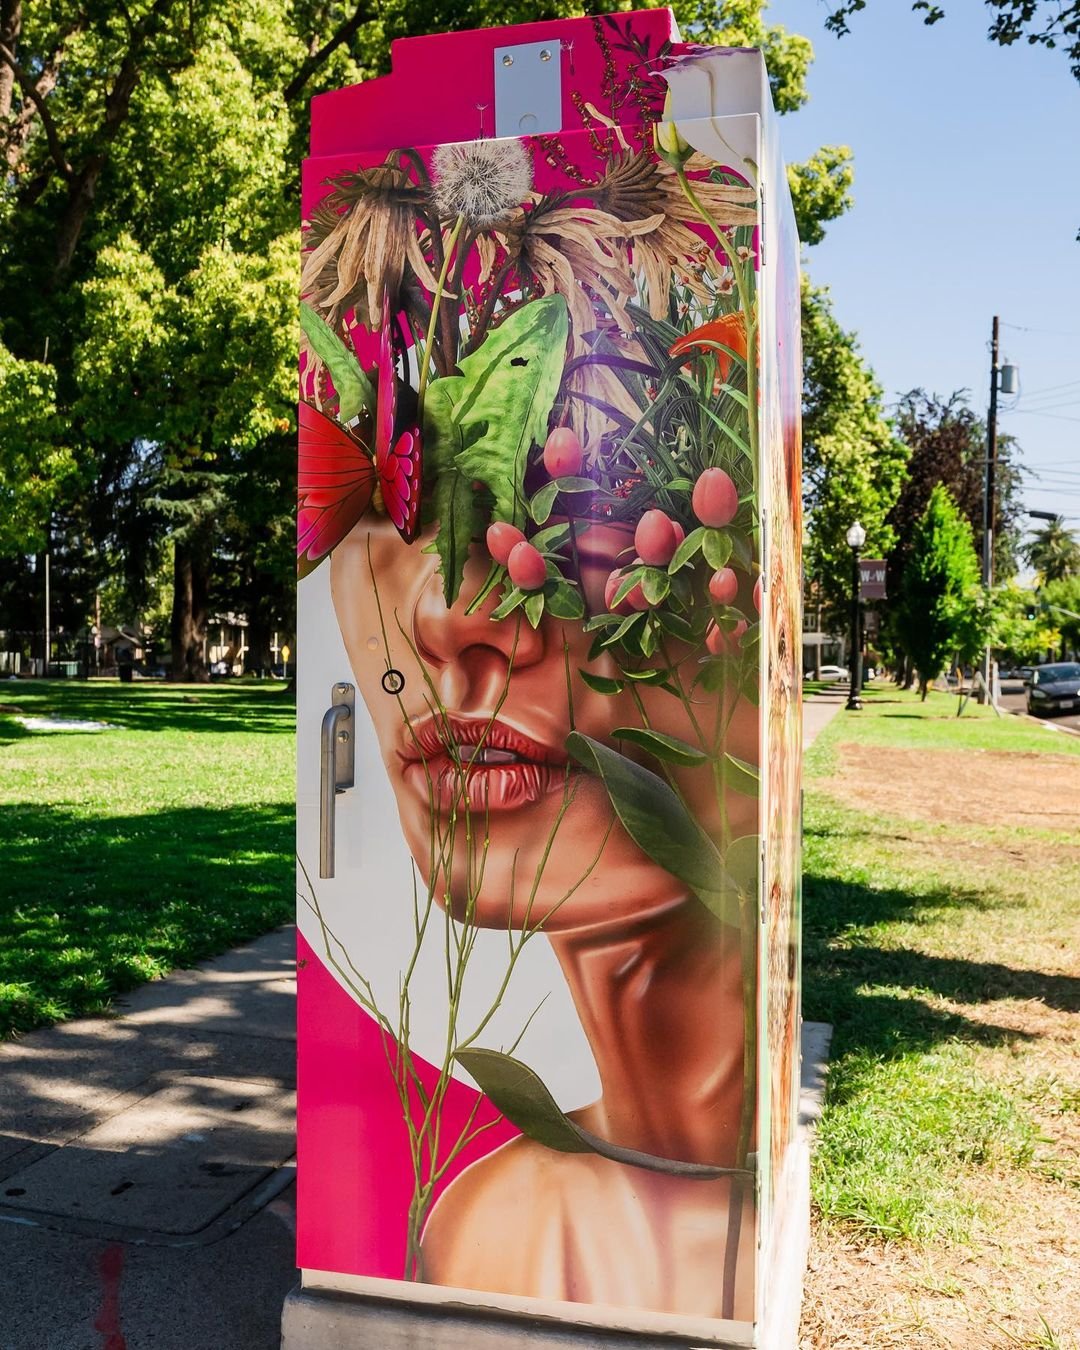 Street-Art-on-Electrical-boxes-by-Brandon-Gastinell-Winn-Park-in-Sacramento-California-3-Photo-by-xsession-4.jpg